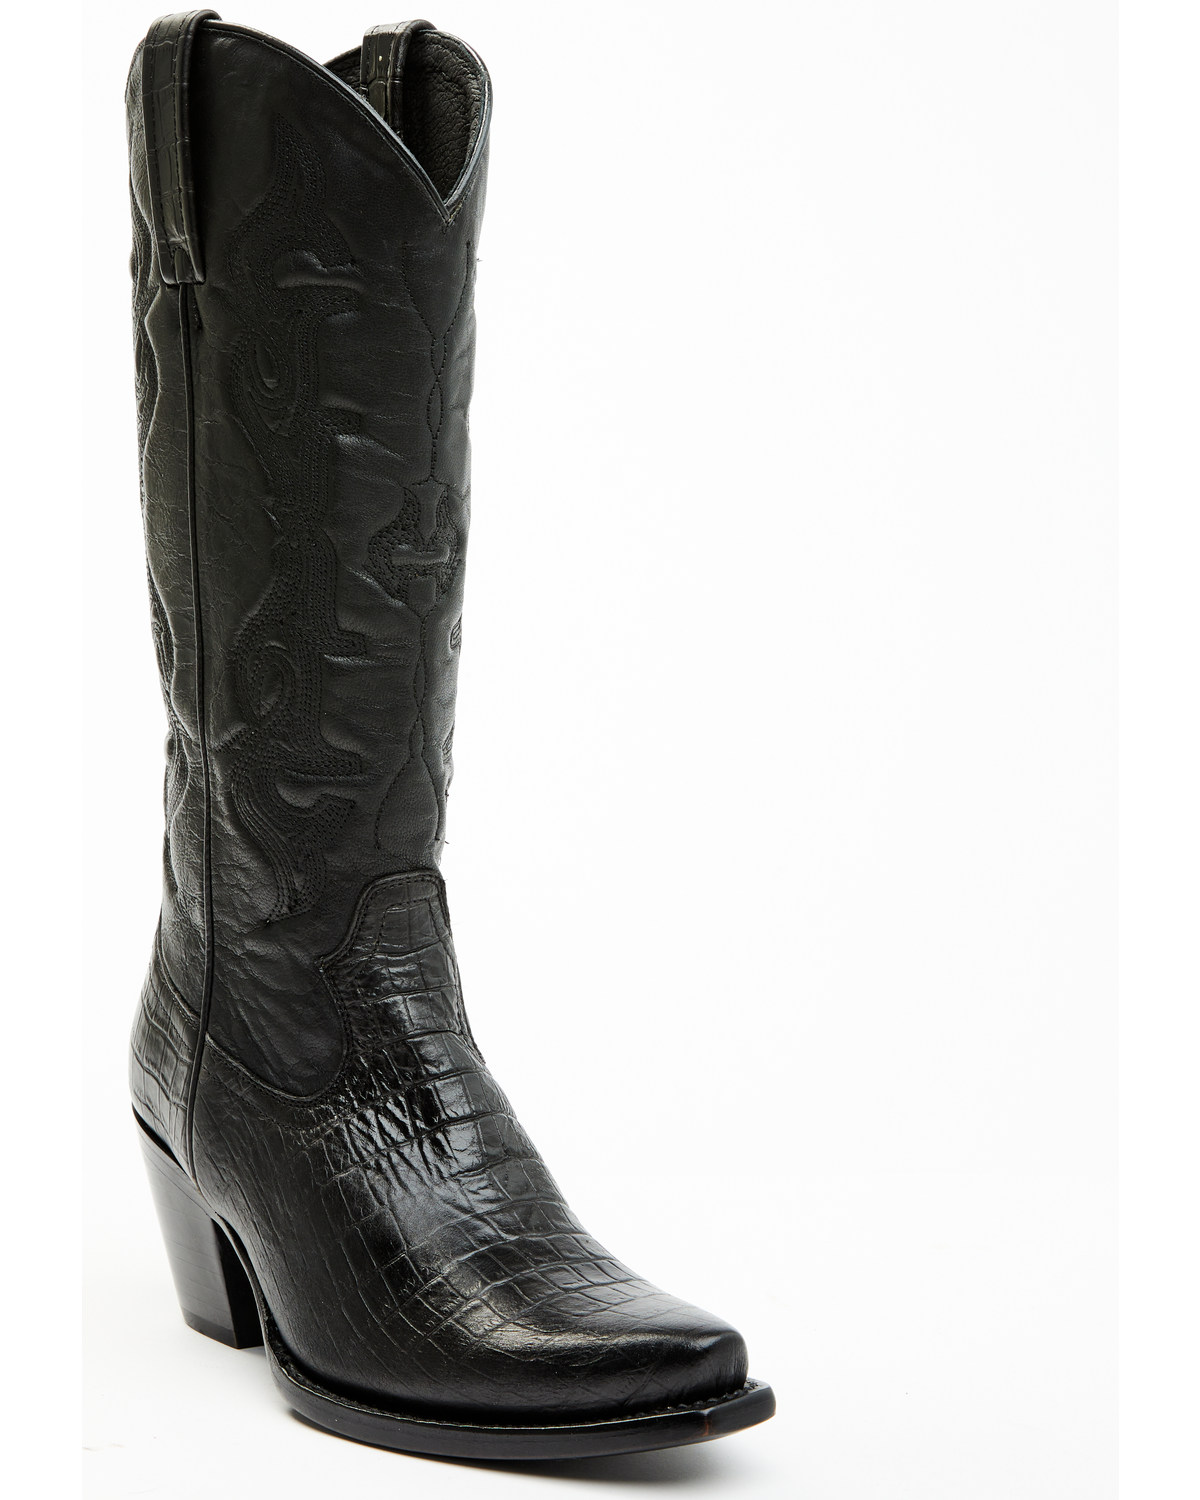 Idyllwind Women's Frisk Me Western Boots - Snip Toe